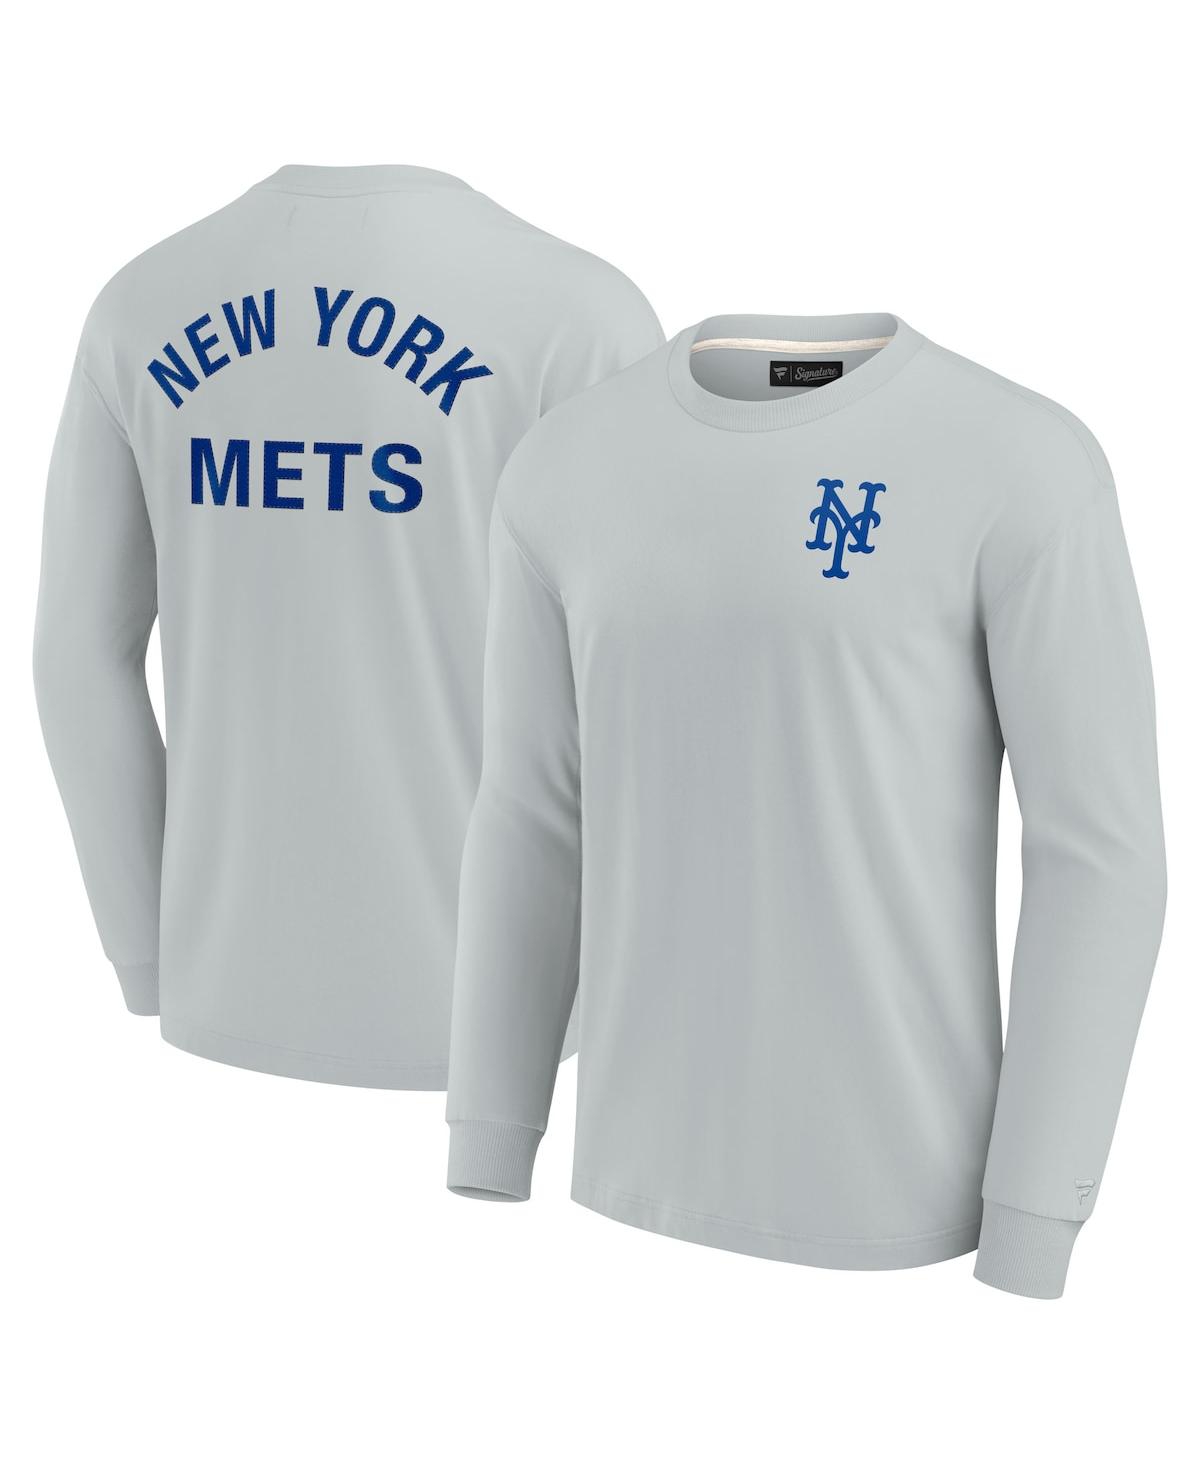 Fanatics Signature Men's And Women's  Gray New York Mets Super Soft Long Sleeve T-shirt